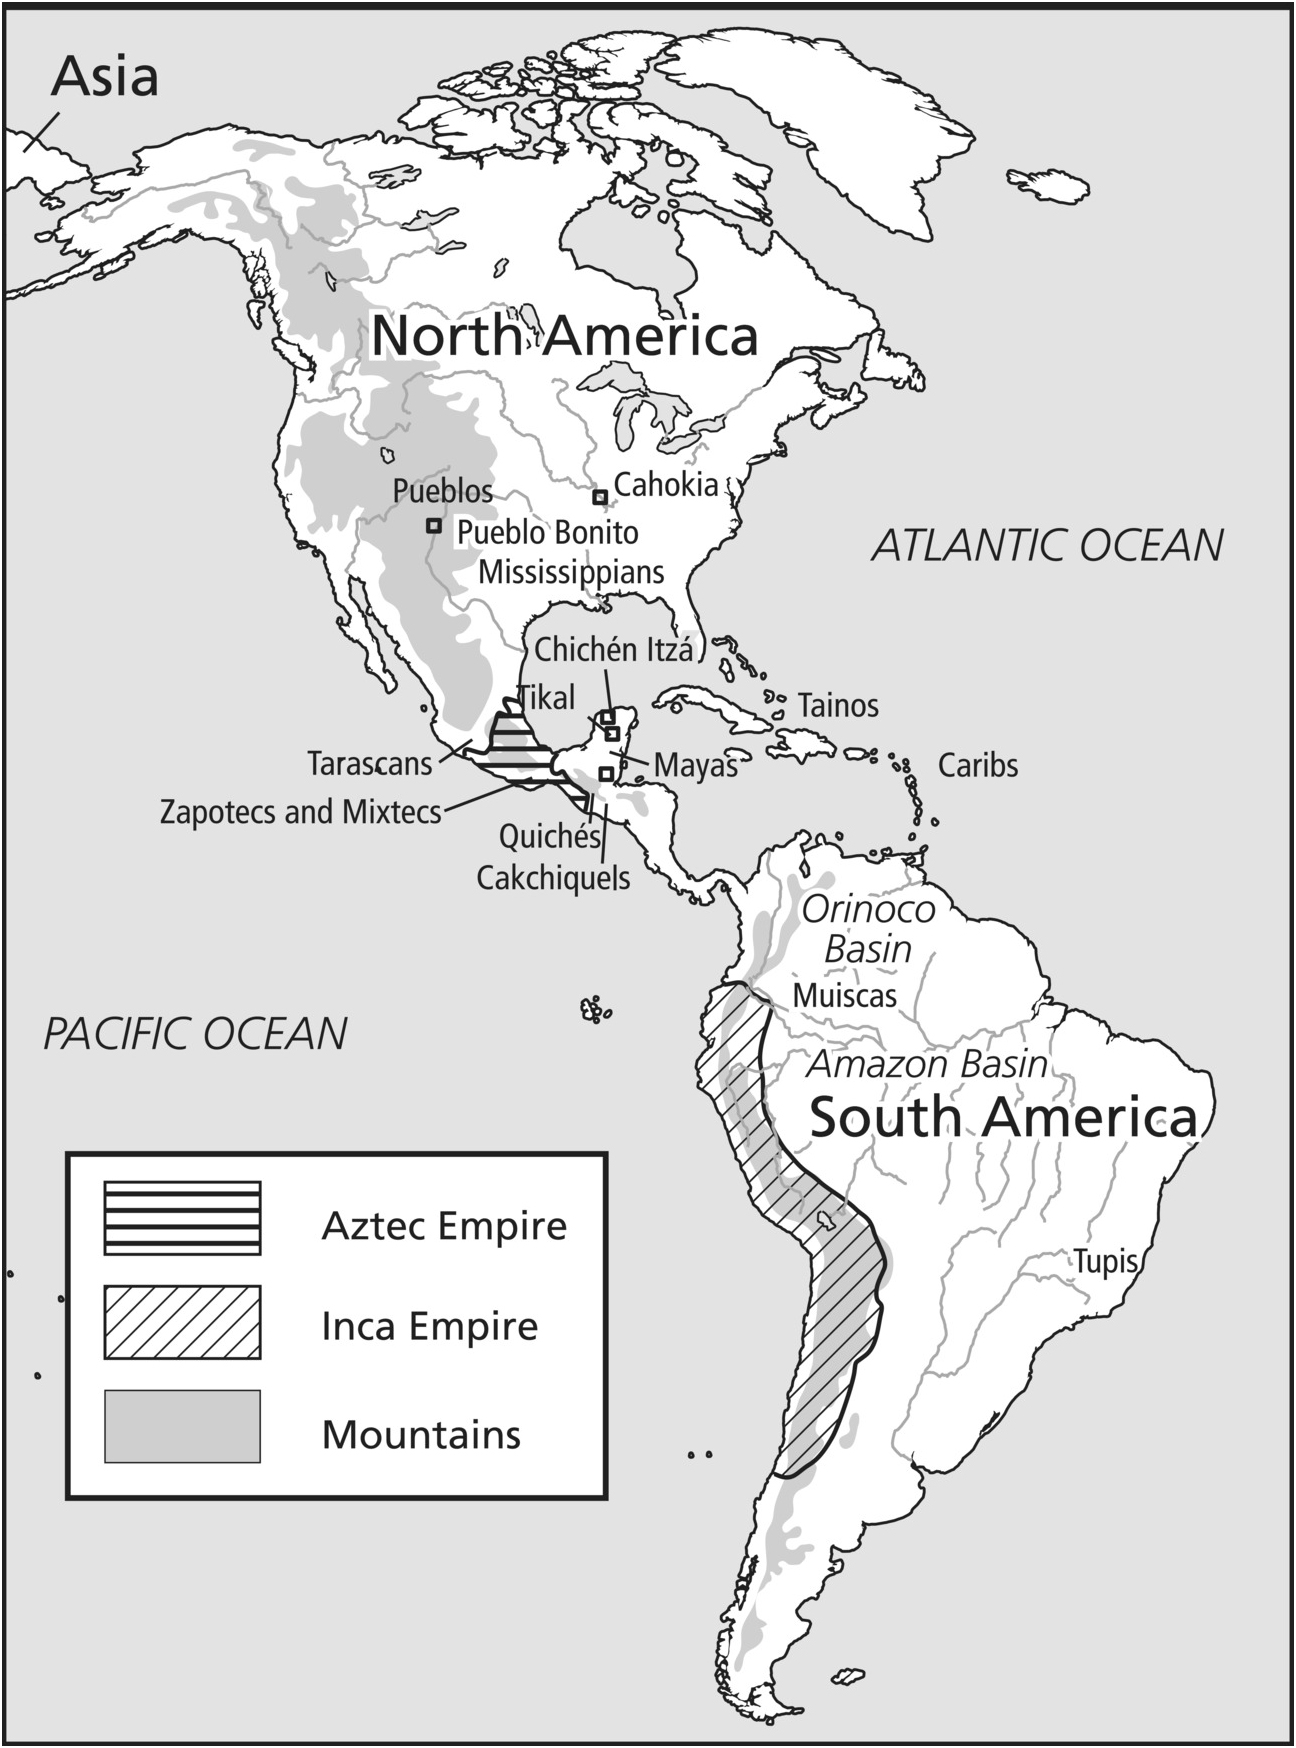 Map of Aztec Empire and Inca Empire